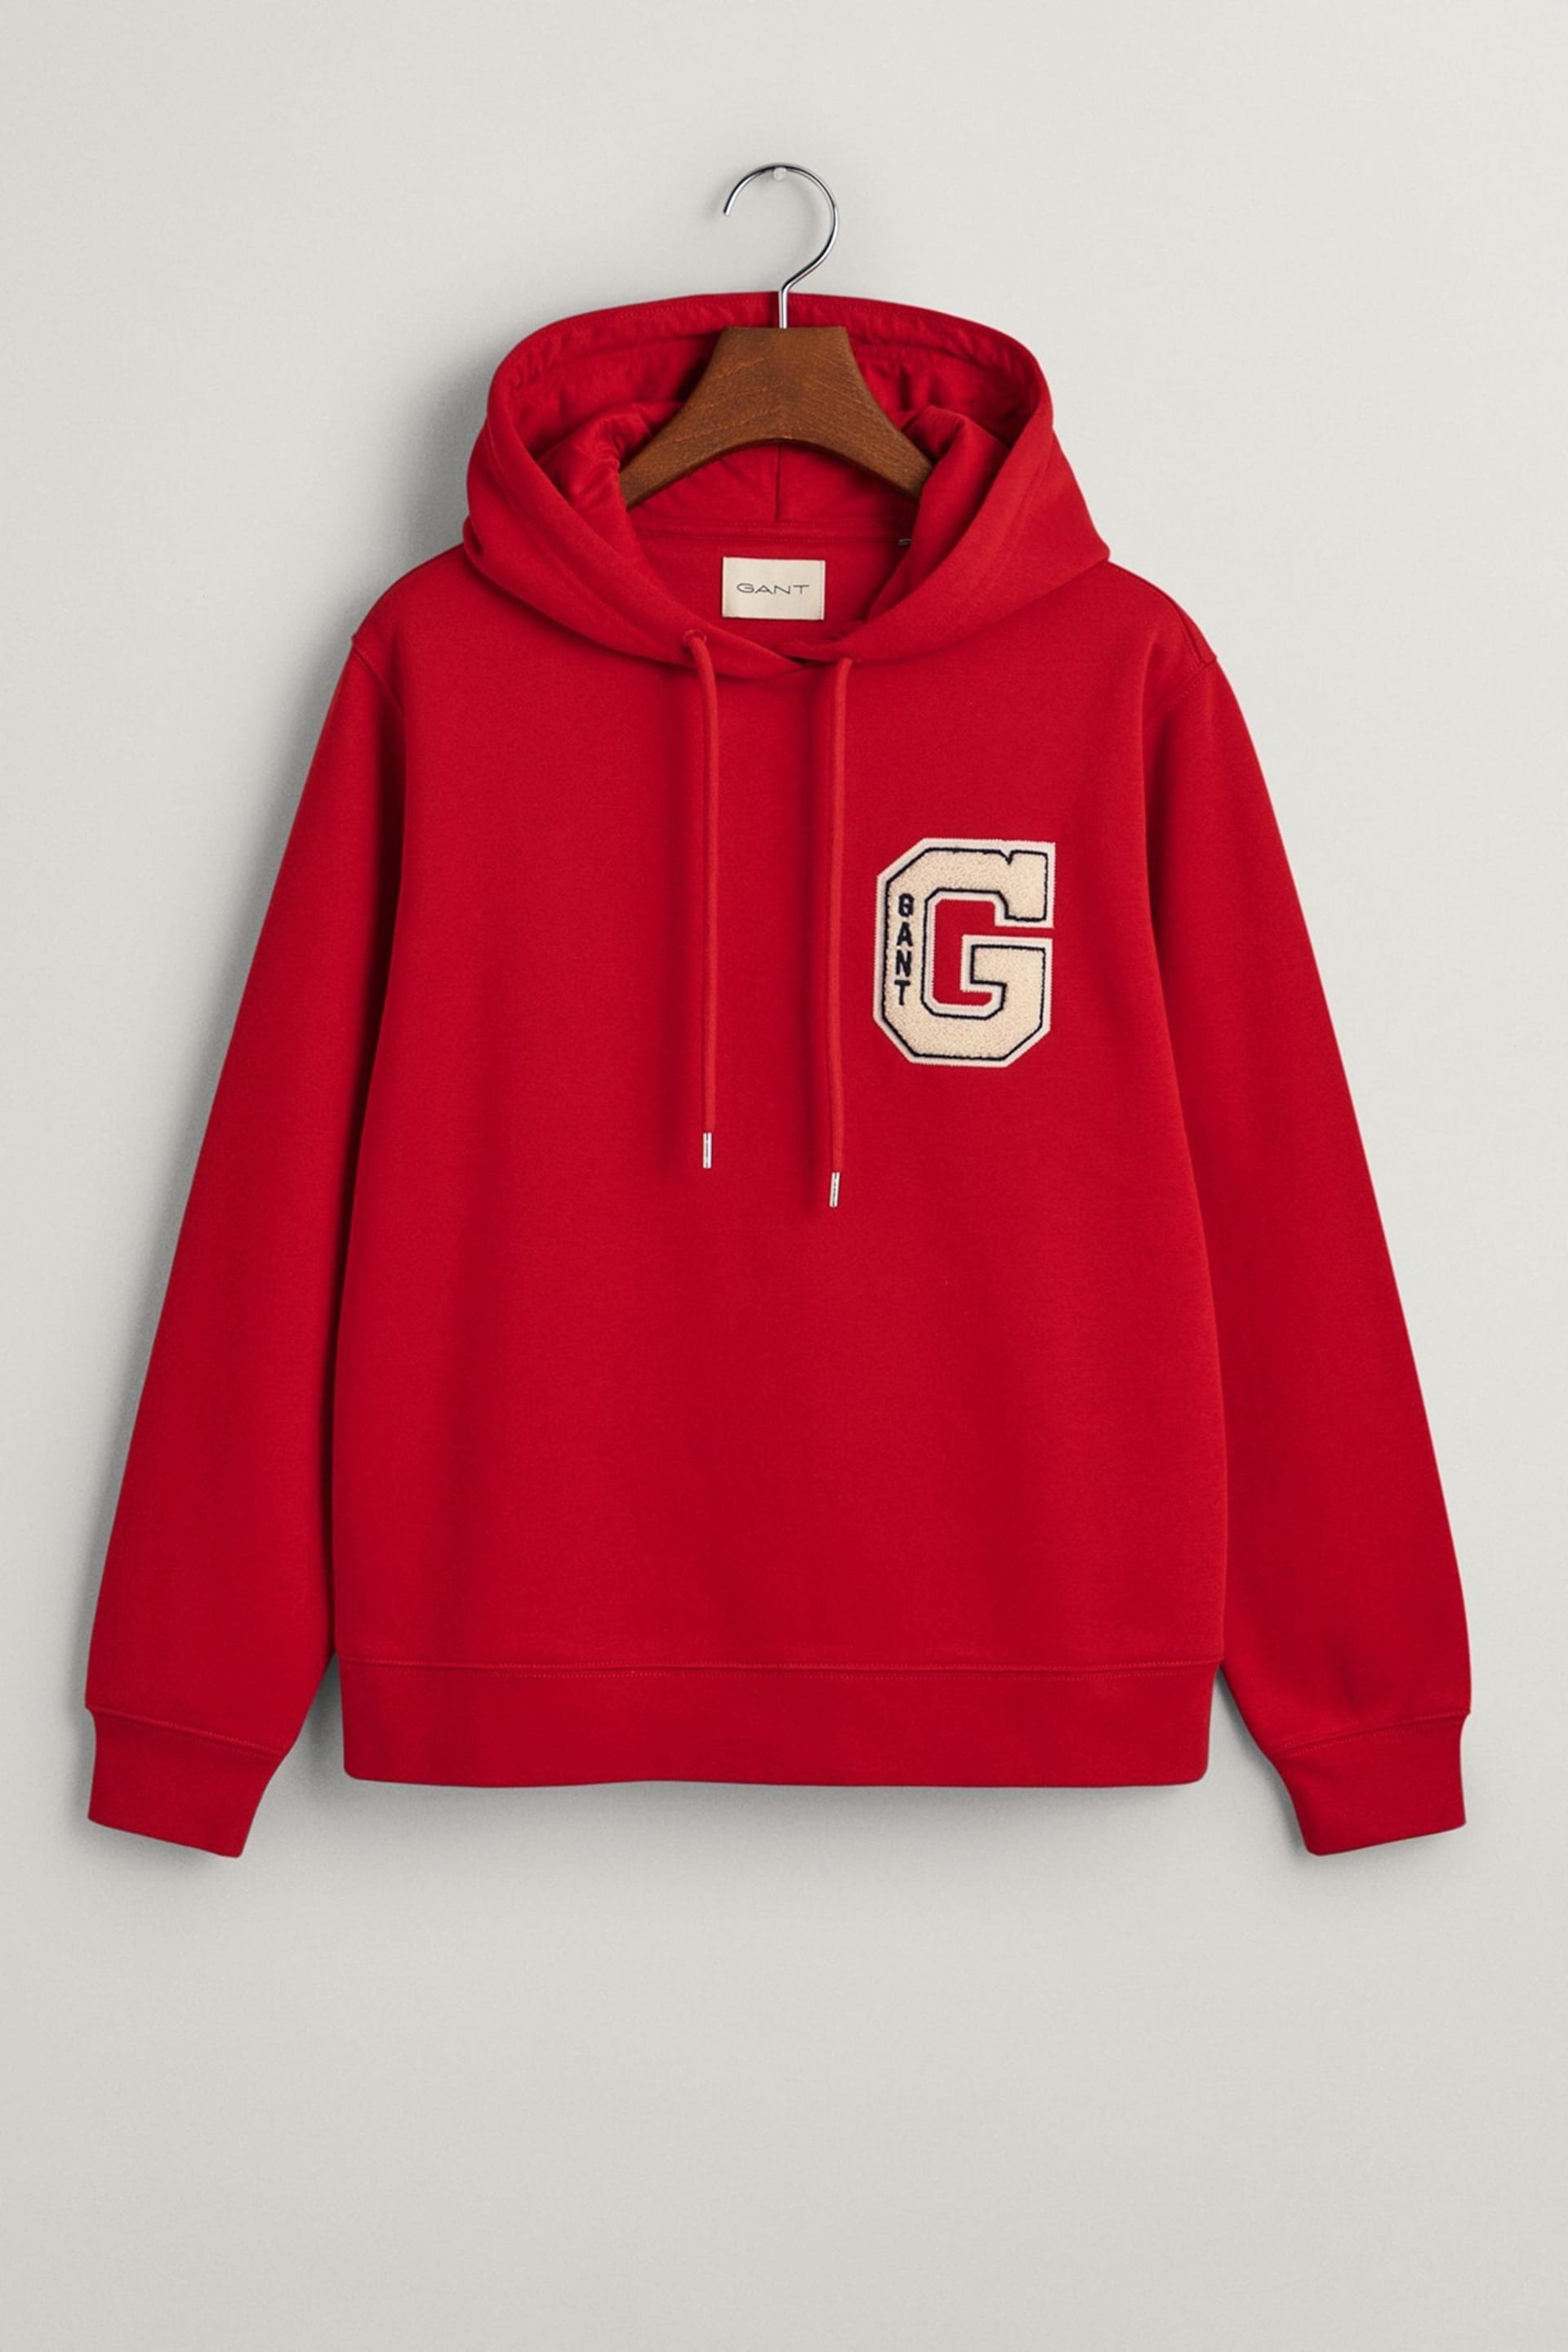 GANT Red Logo Hoodie - Image 6 of 6